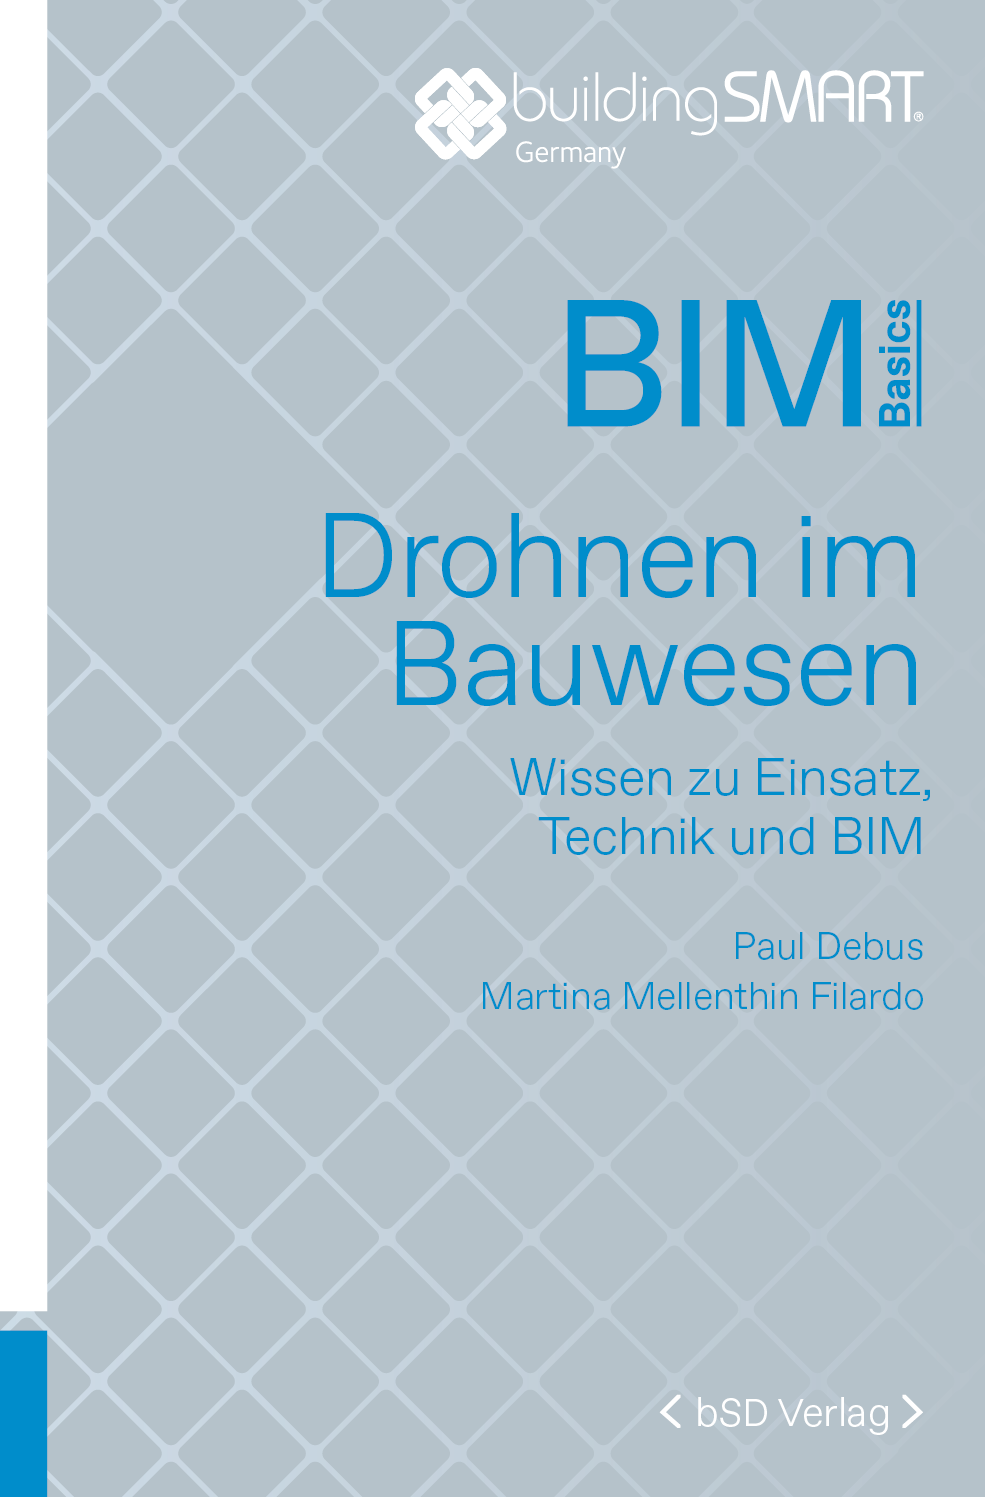 bSD Verlag/BIM Basics: Drohnen im Bauwesen